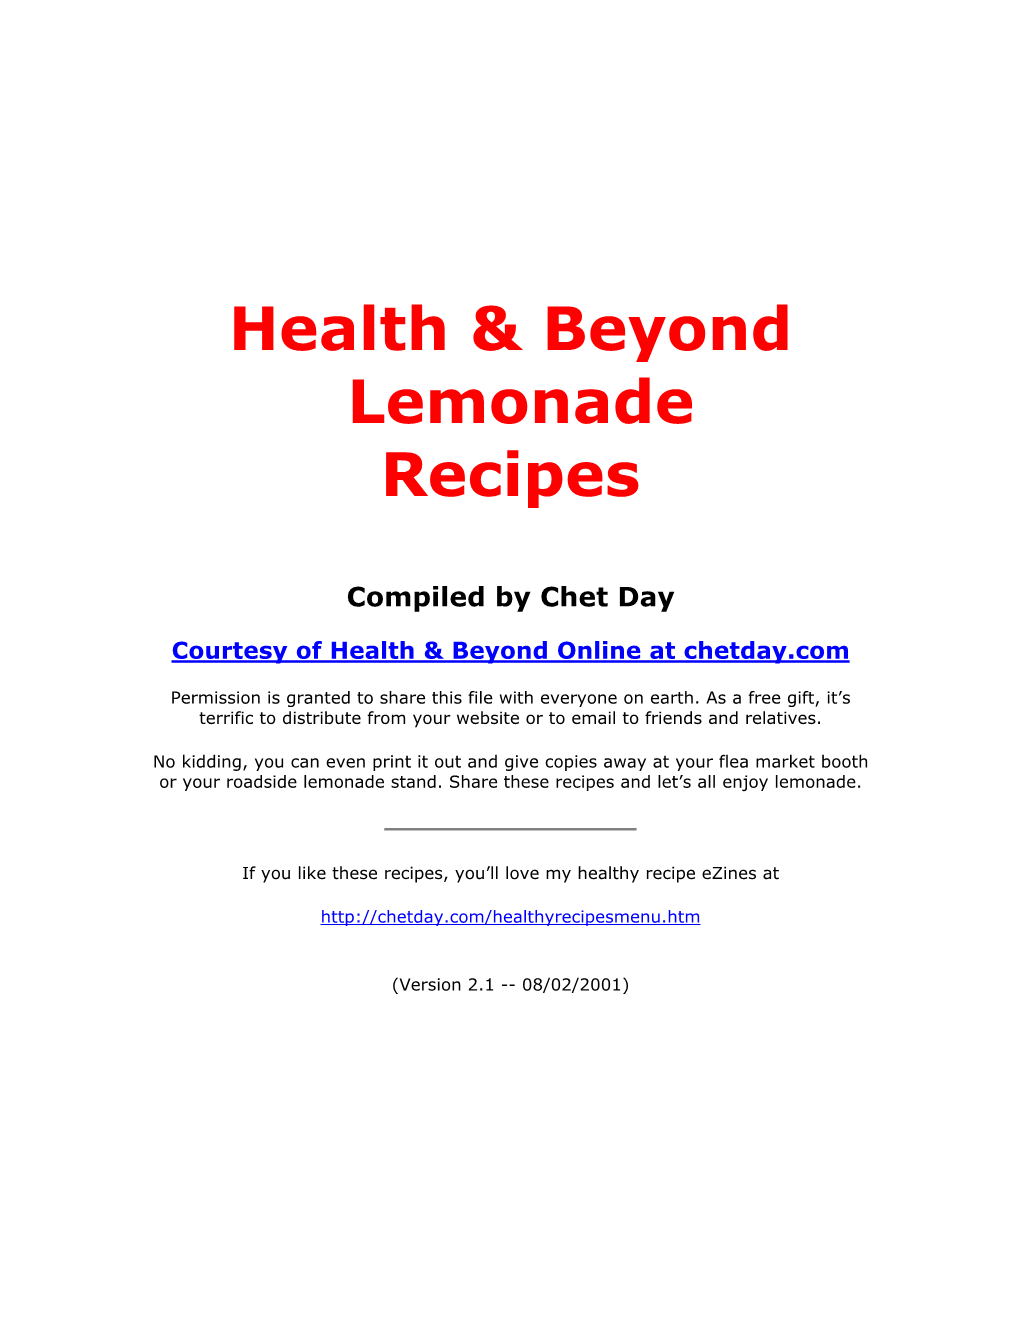 Health & Beyond Lemonade Recipes